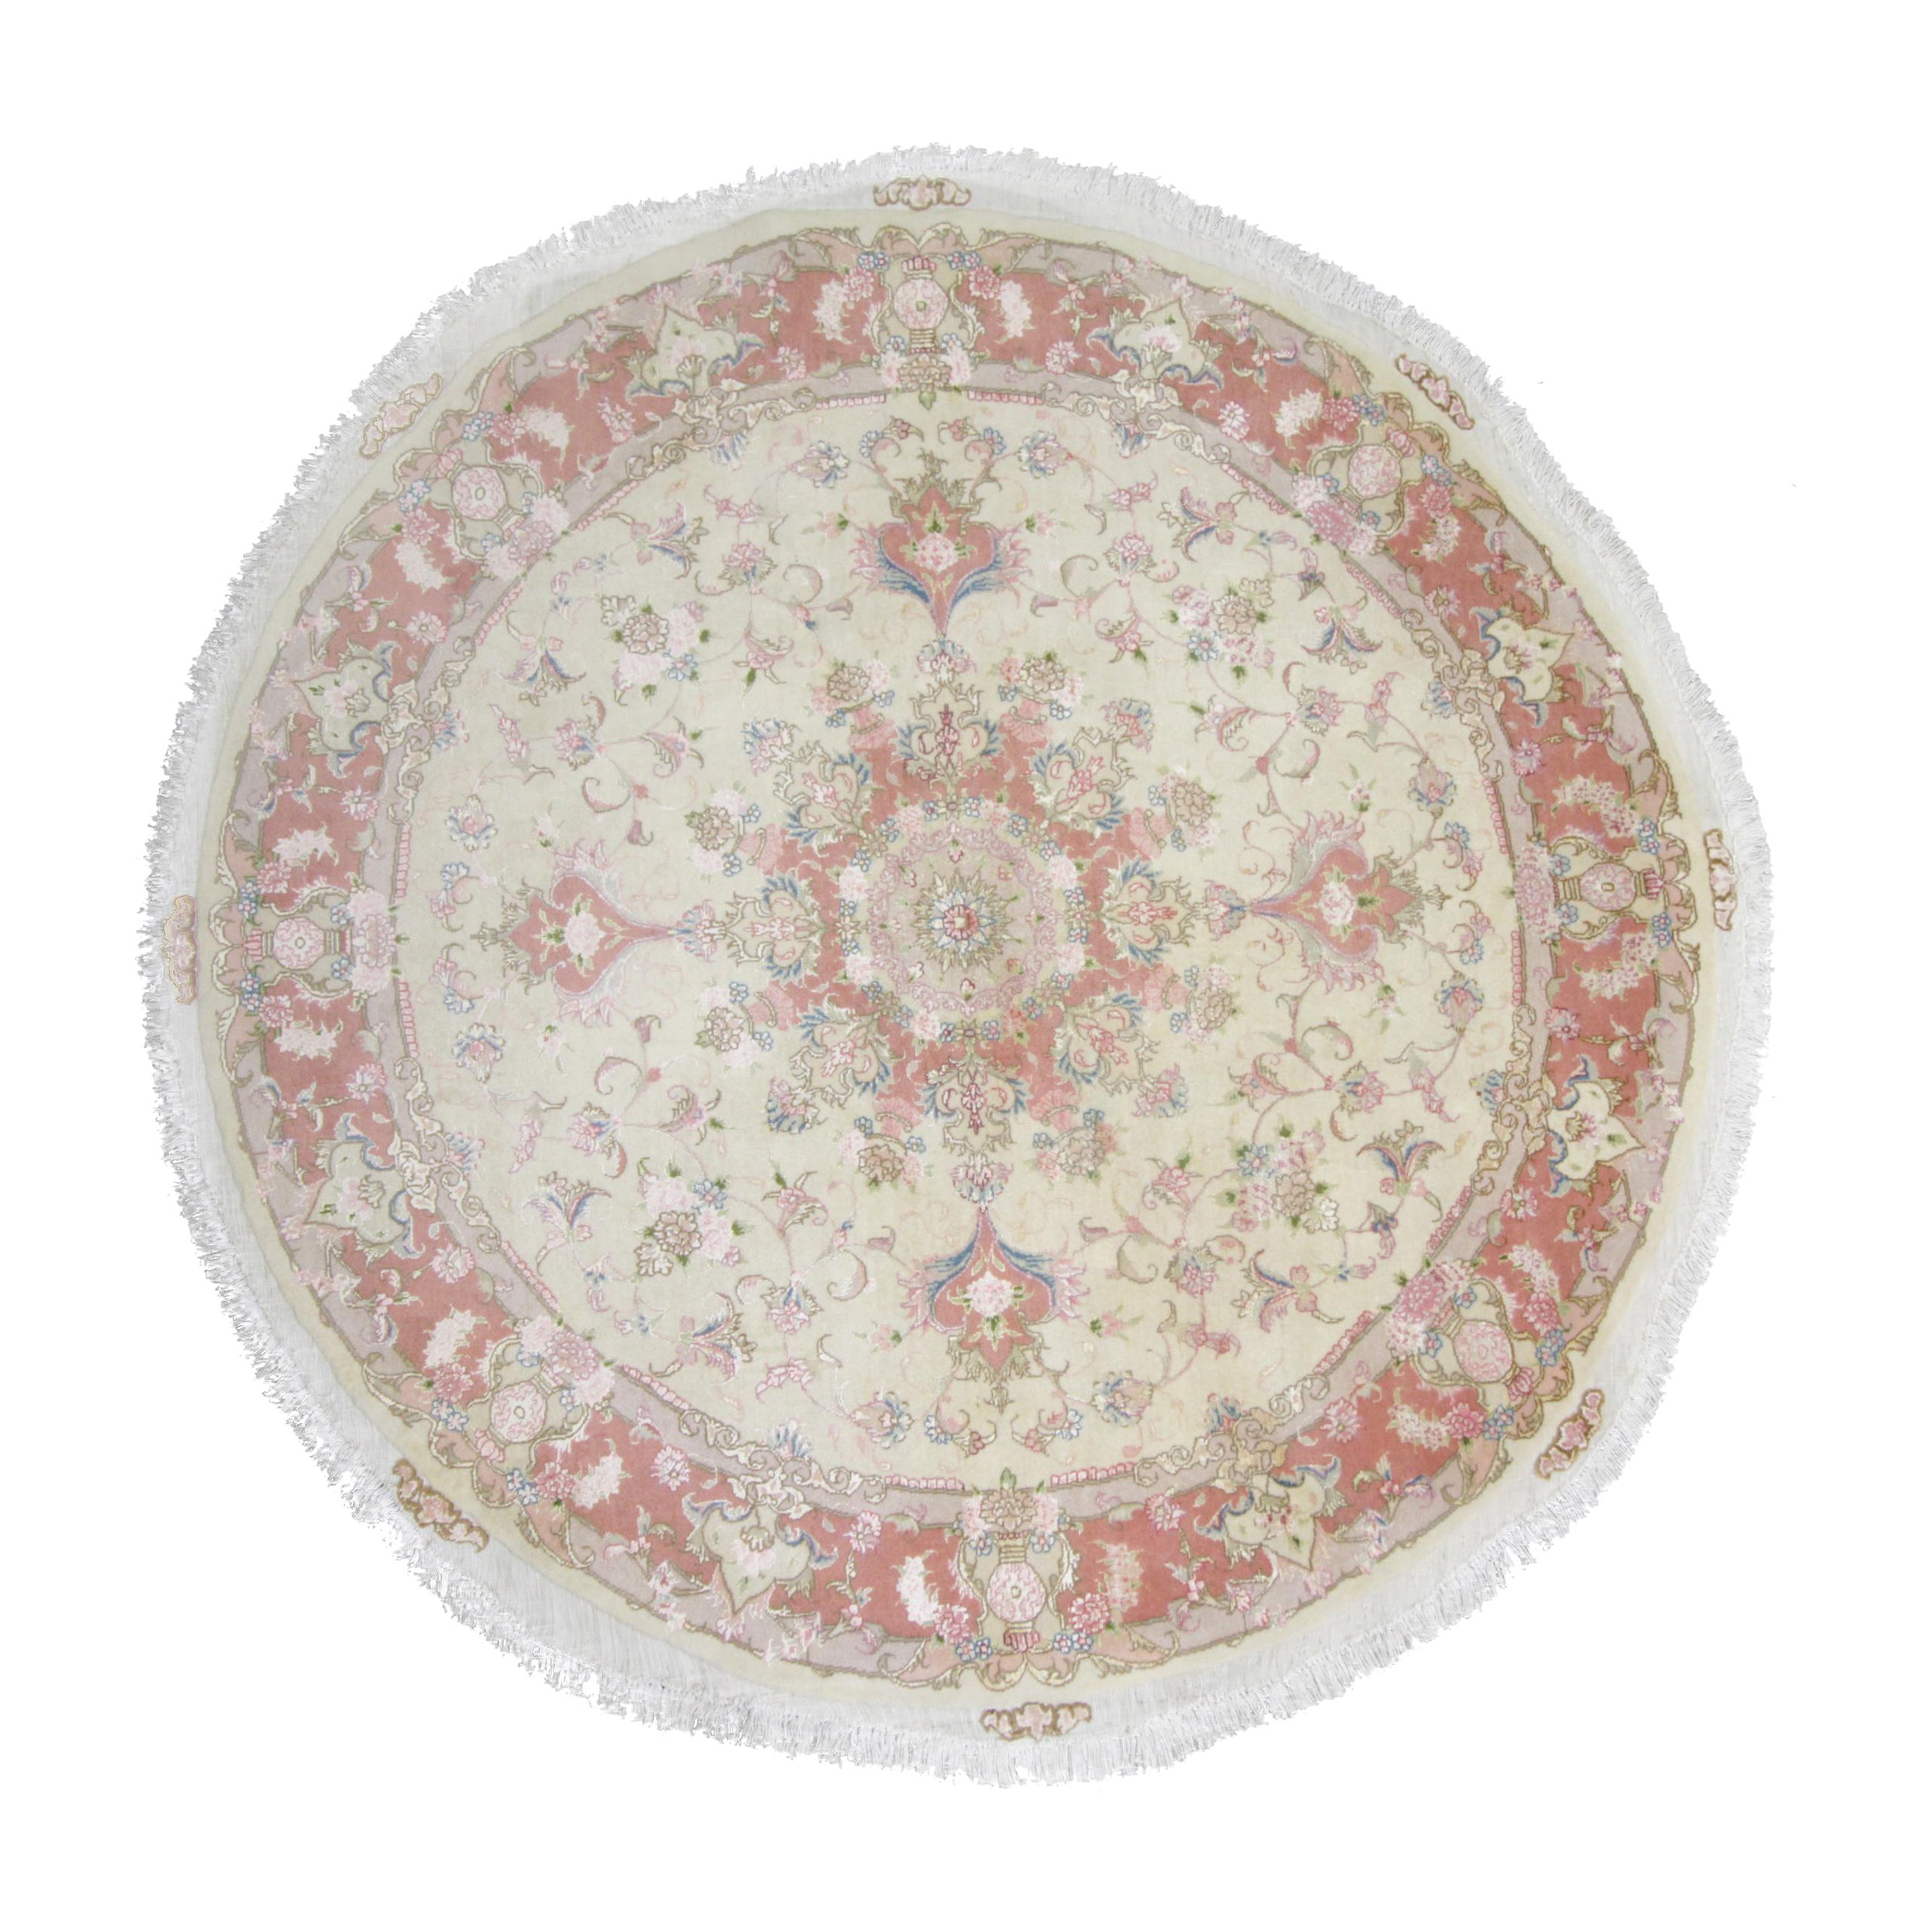 Circular Turkish Wool and Silk Rug, Oriental Cream Pink Handmade Carpet For Sale